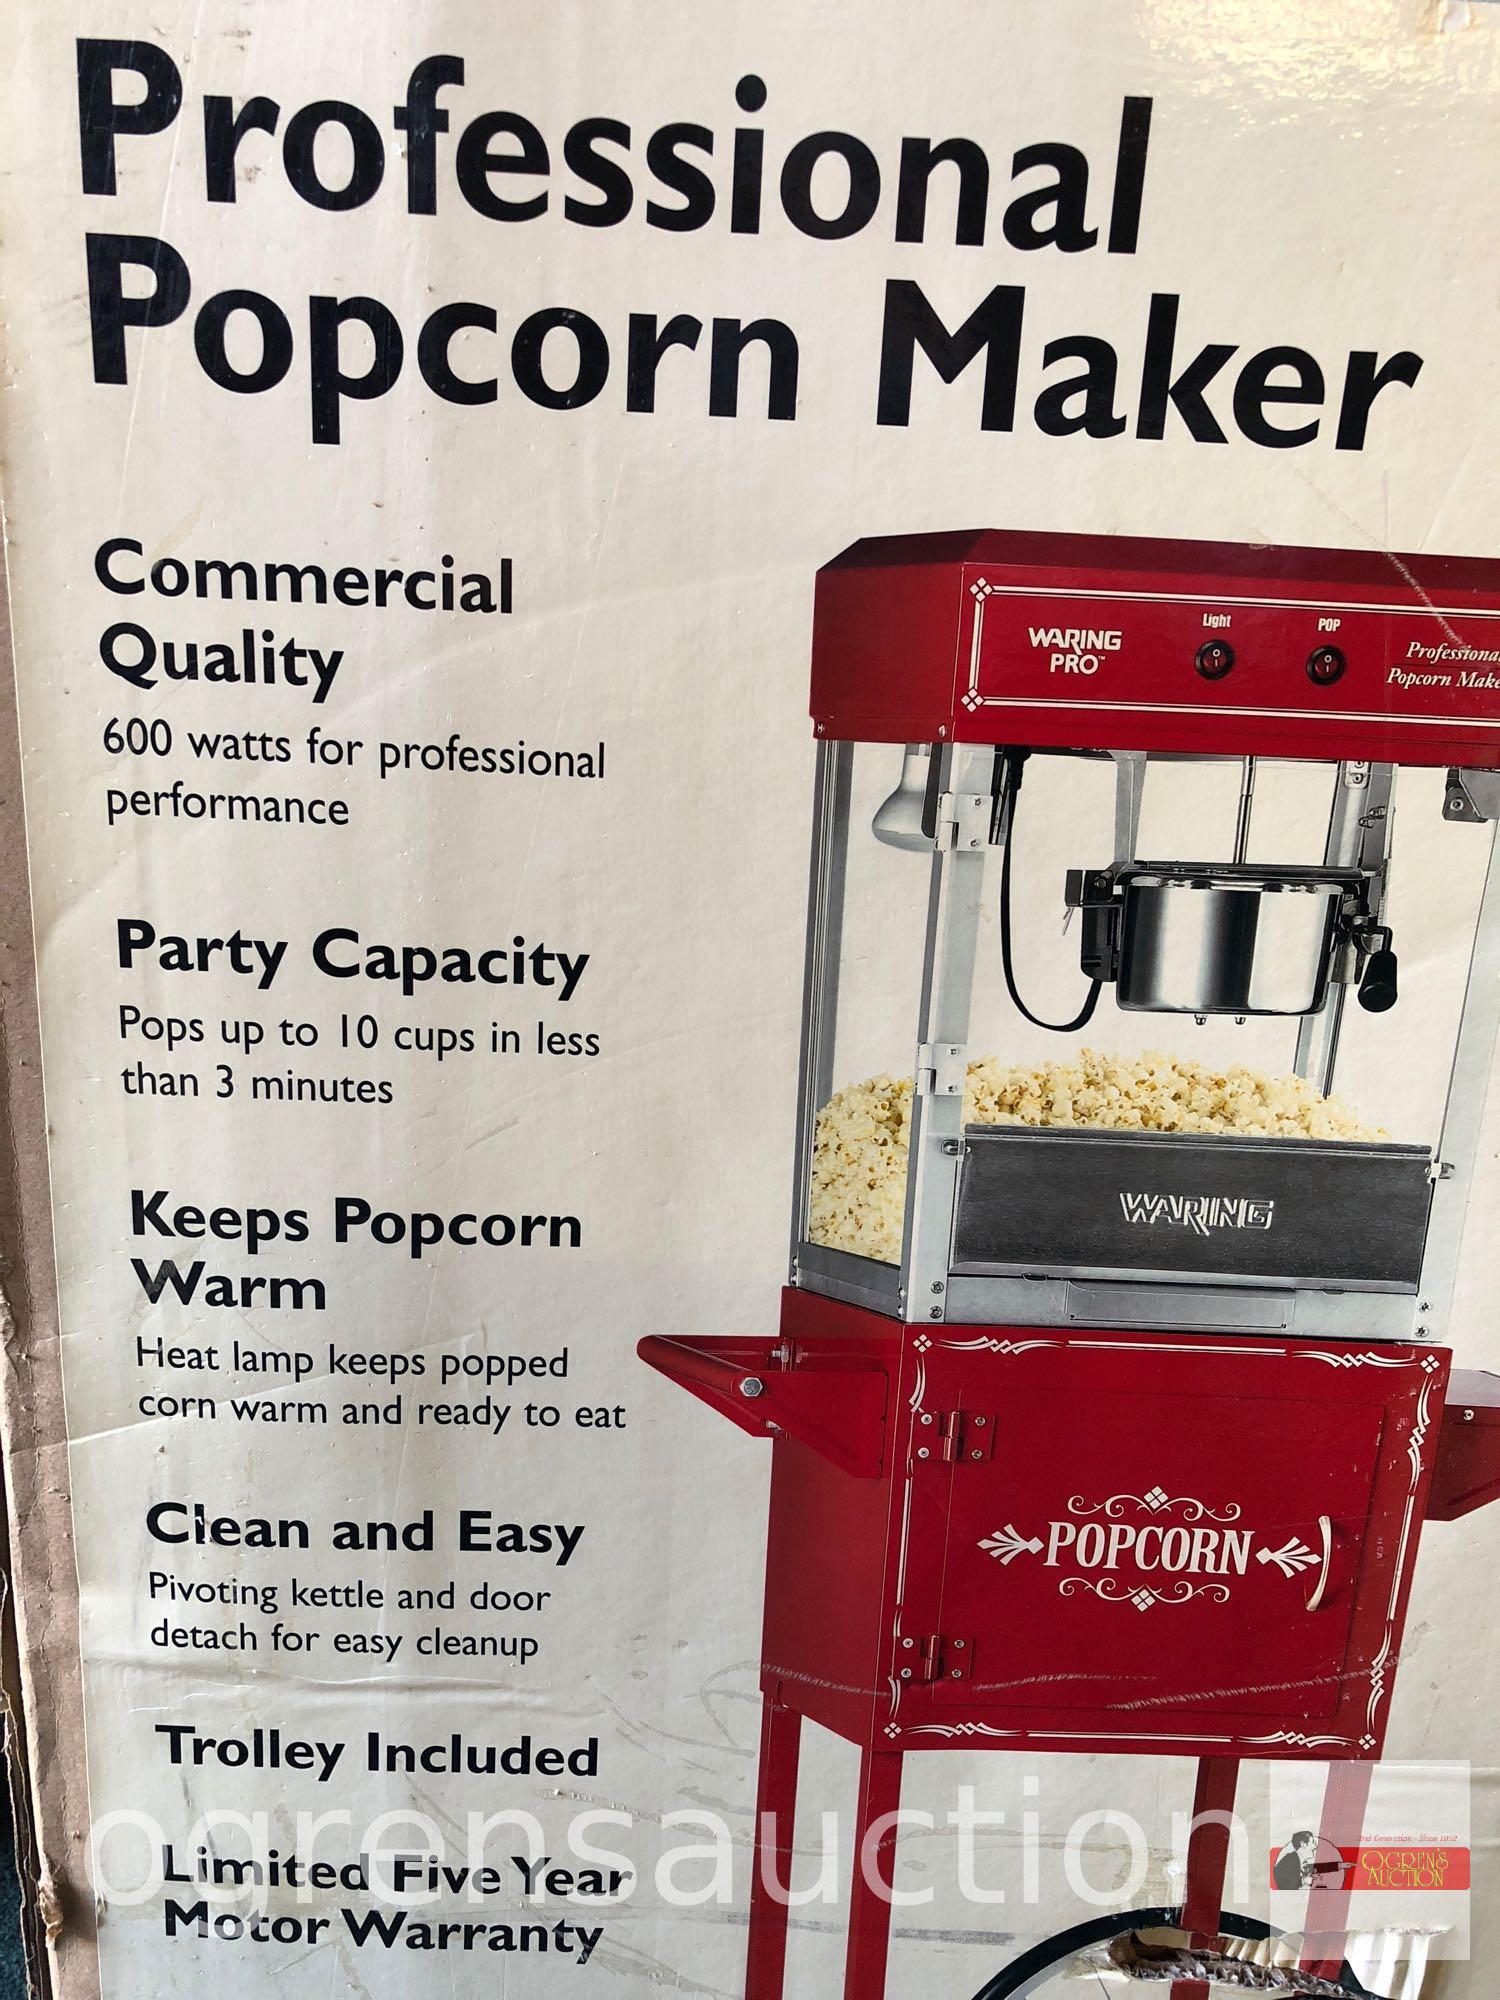 Waring Pro Professional Popcorn Maker Cart, unused in orig. box